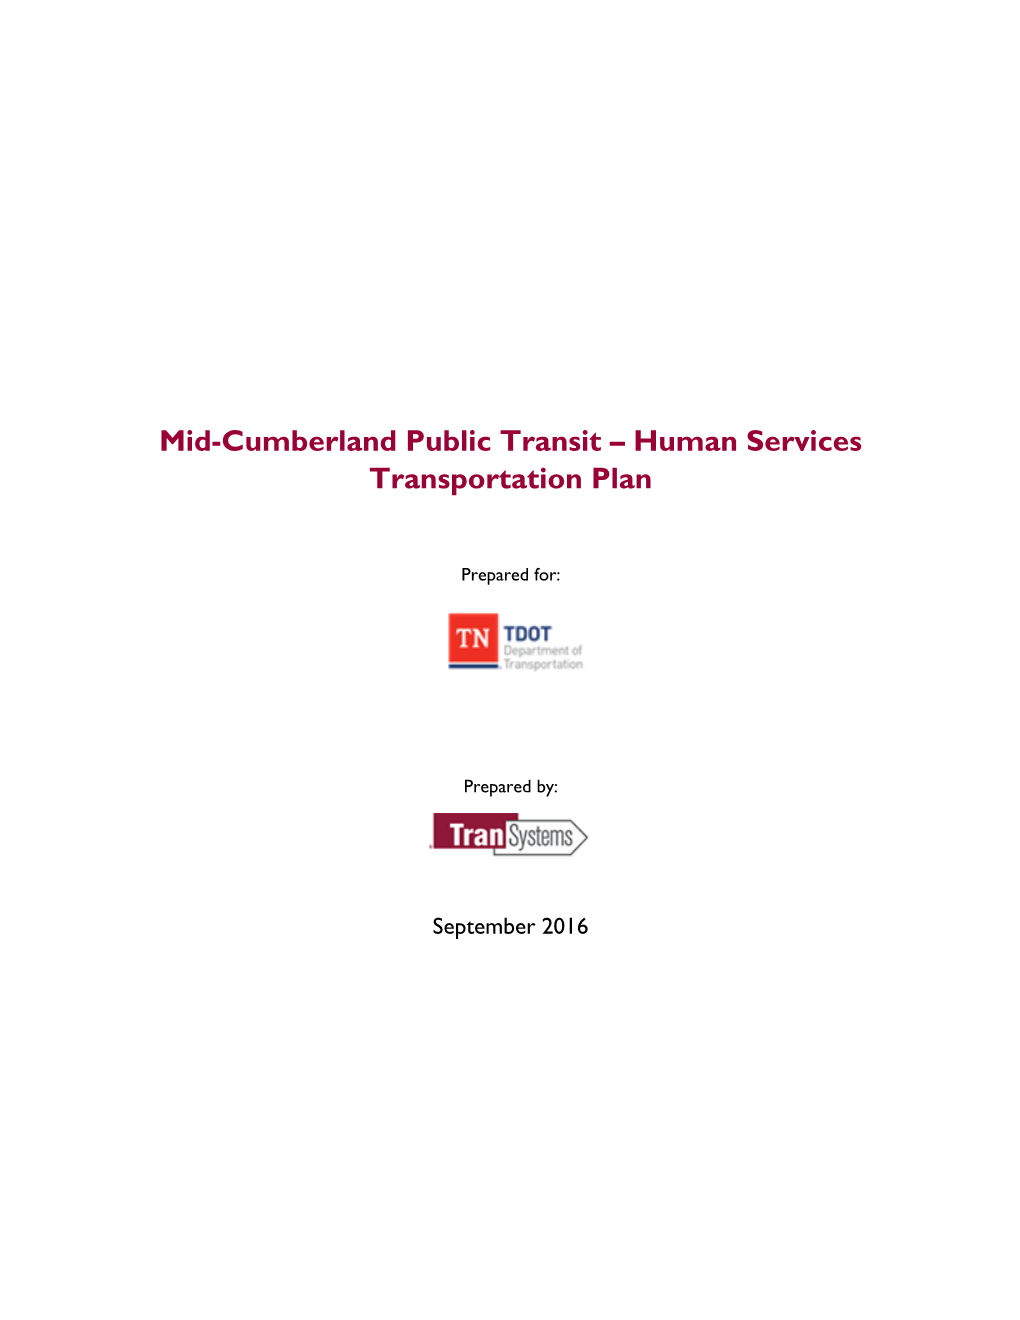 Mid-Cumberland Public Transit – Human Services Transportation Plan